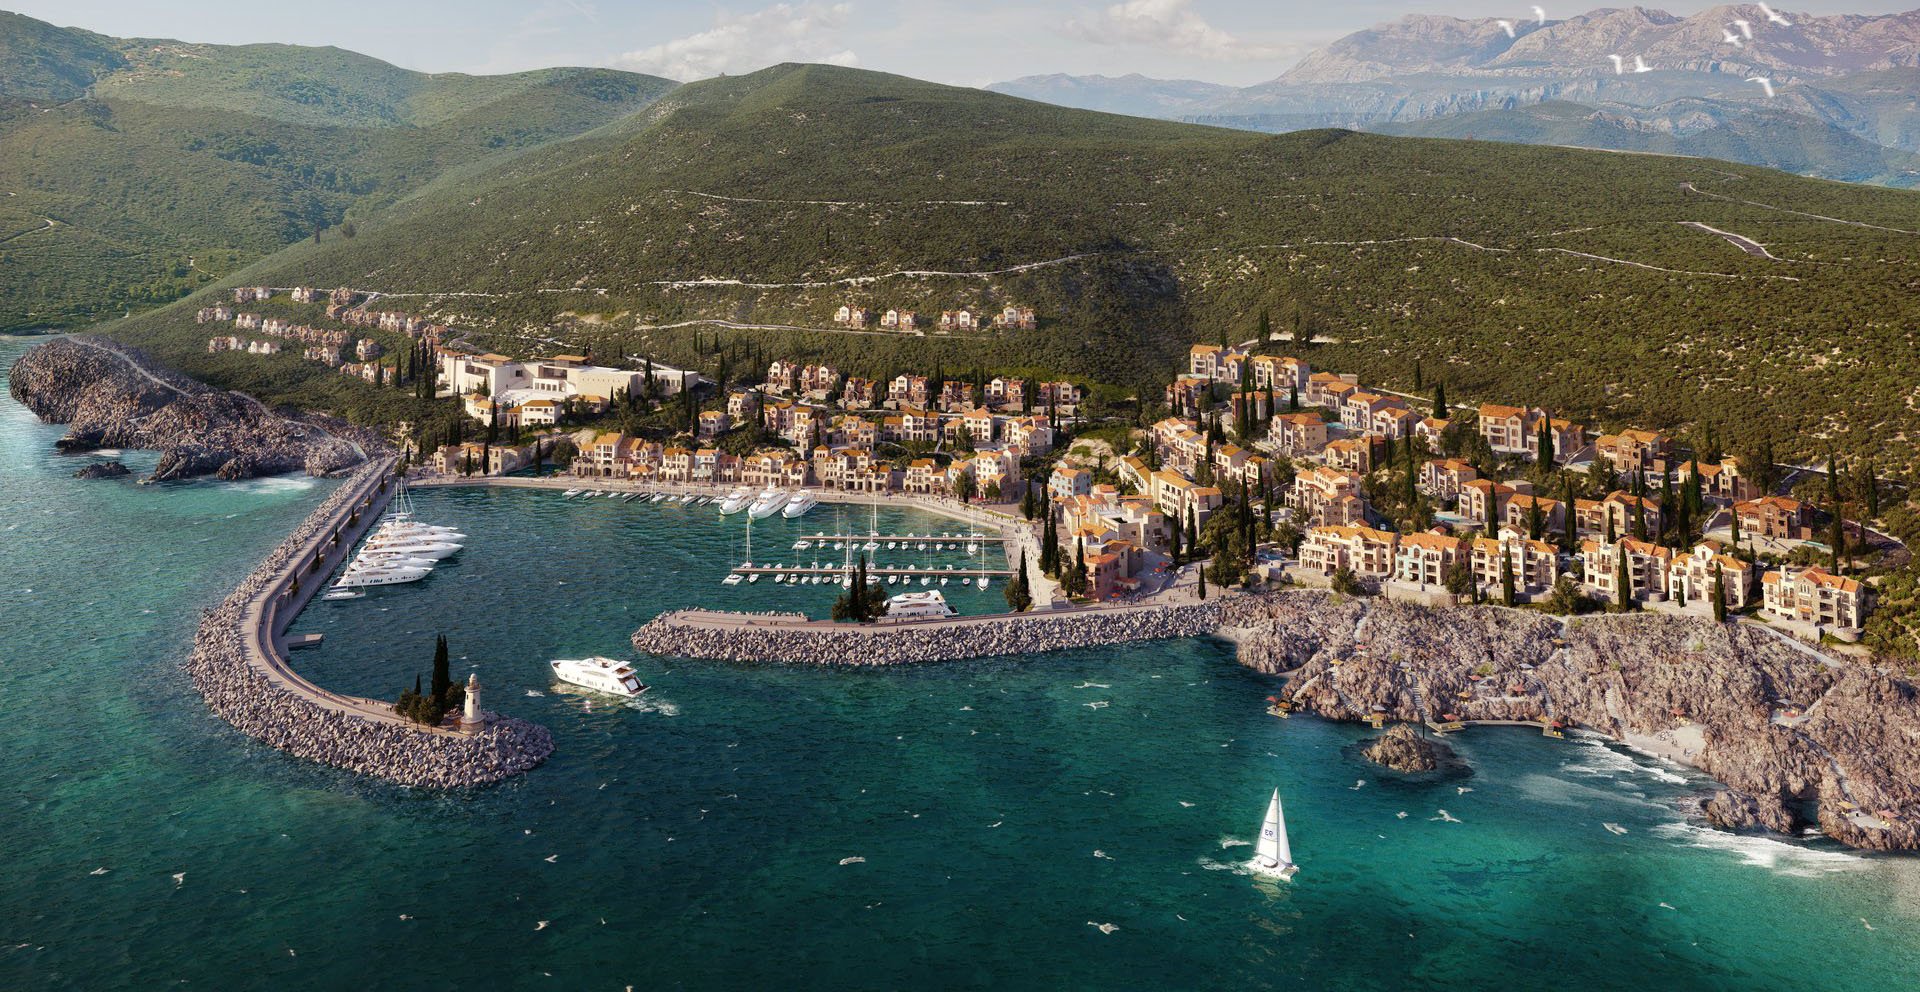 kinney-smith-prestige-living-montenegro-lustica-orascom-baltic-sea-luxury-property-marina-mountains-apartment-townhouse-villa-real-estate